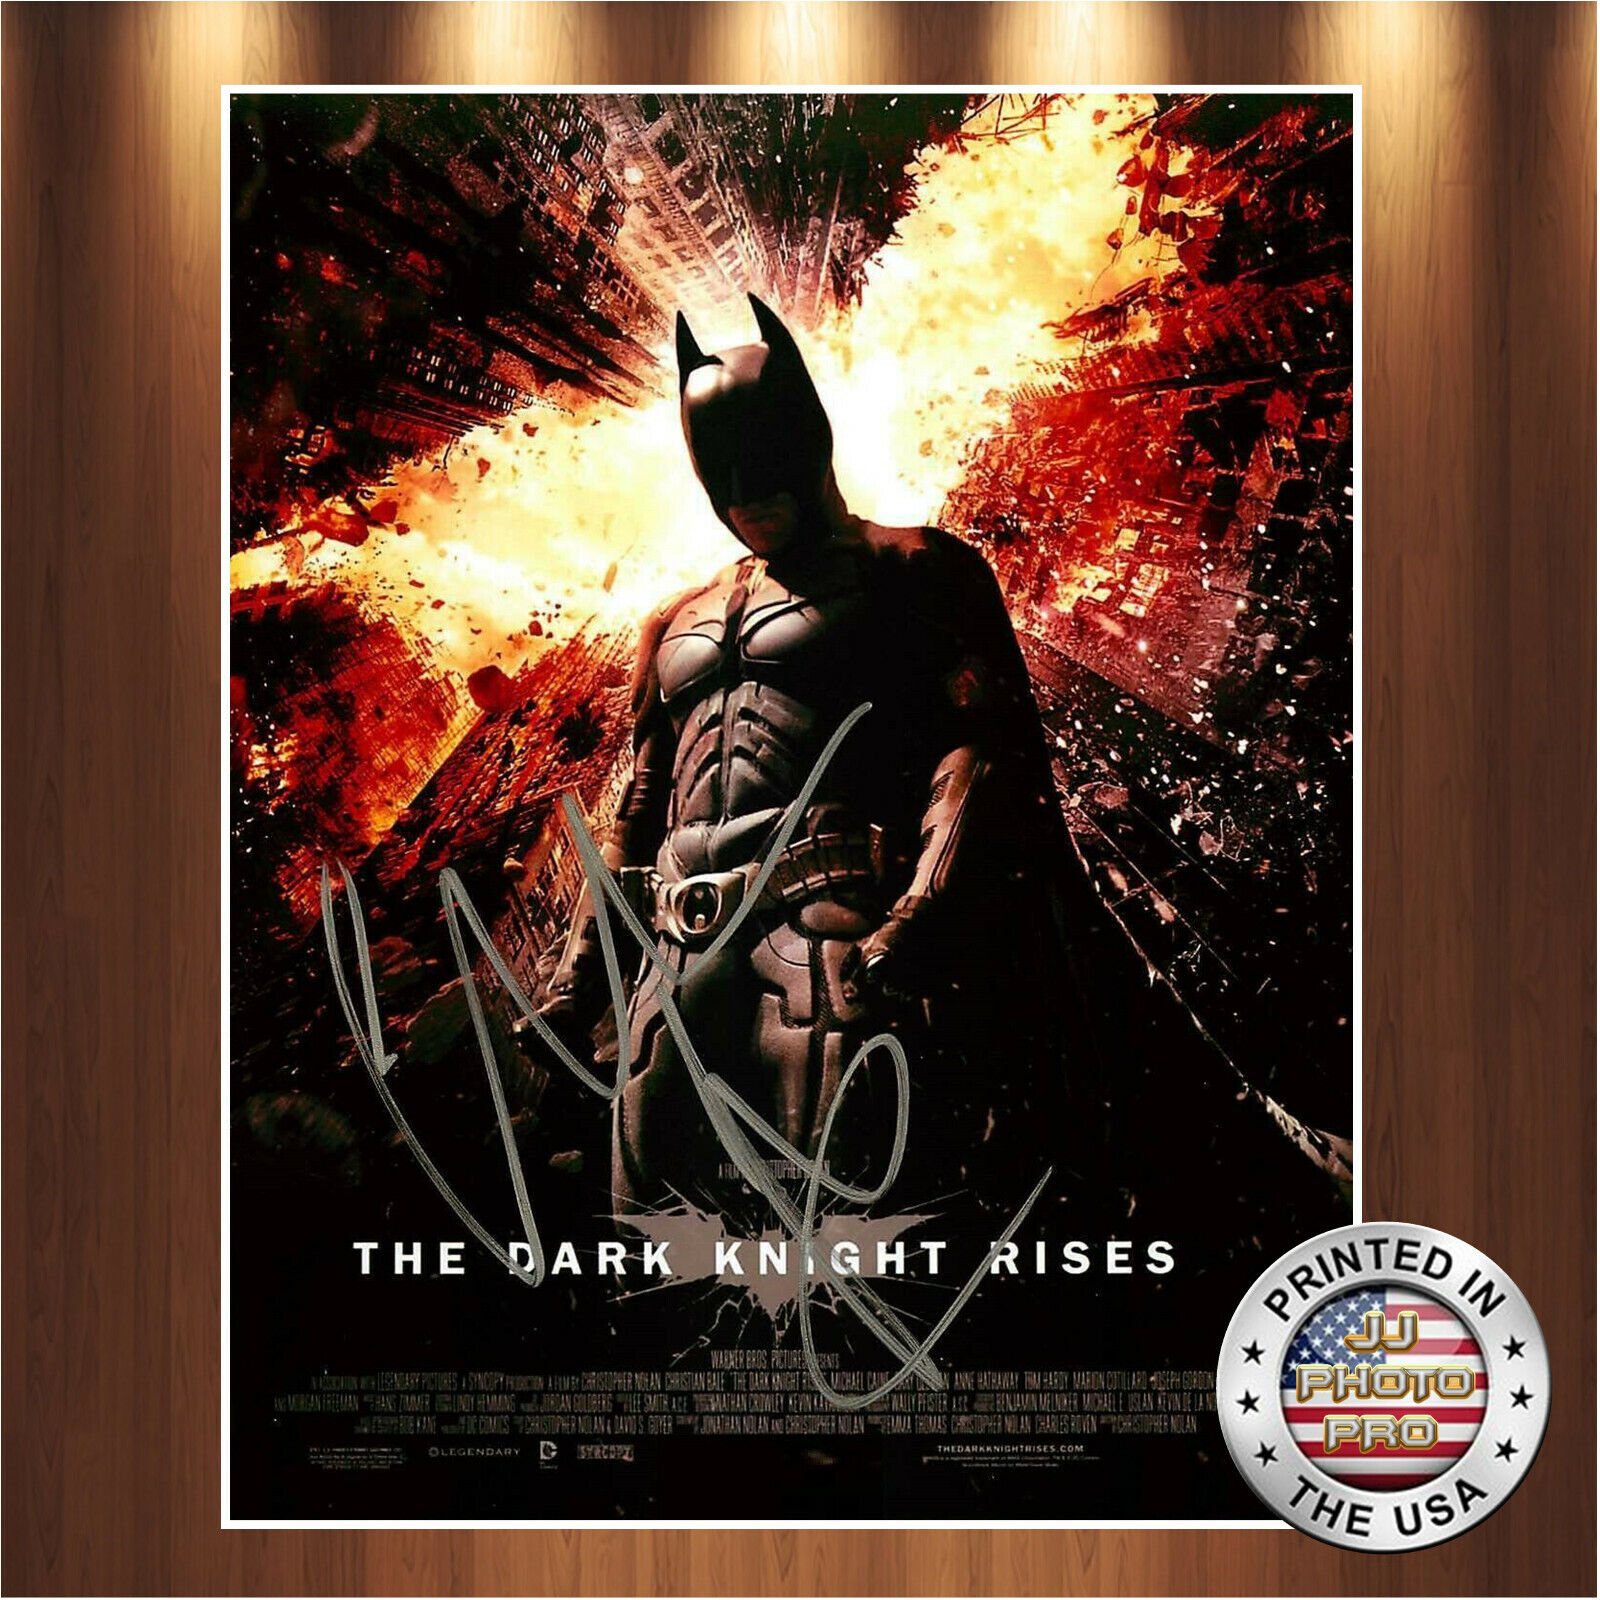 Christian Bale Autographed Signed 8x10 Photo Poster painting (Batman) REPRINT